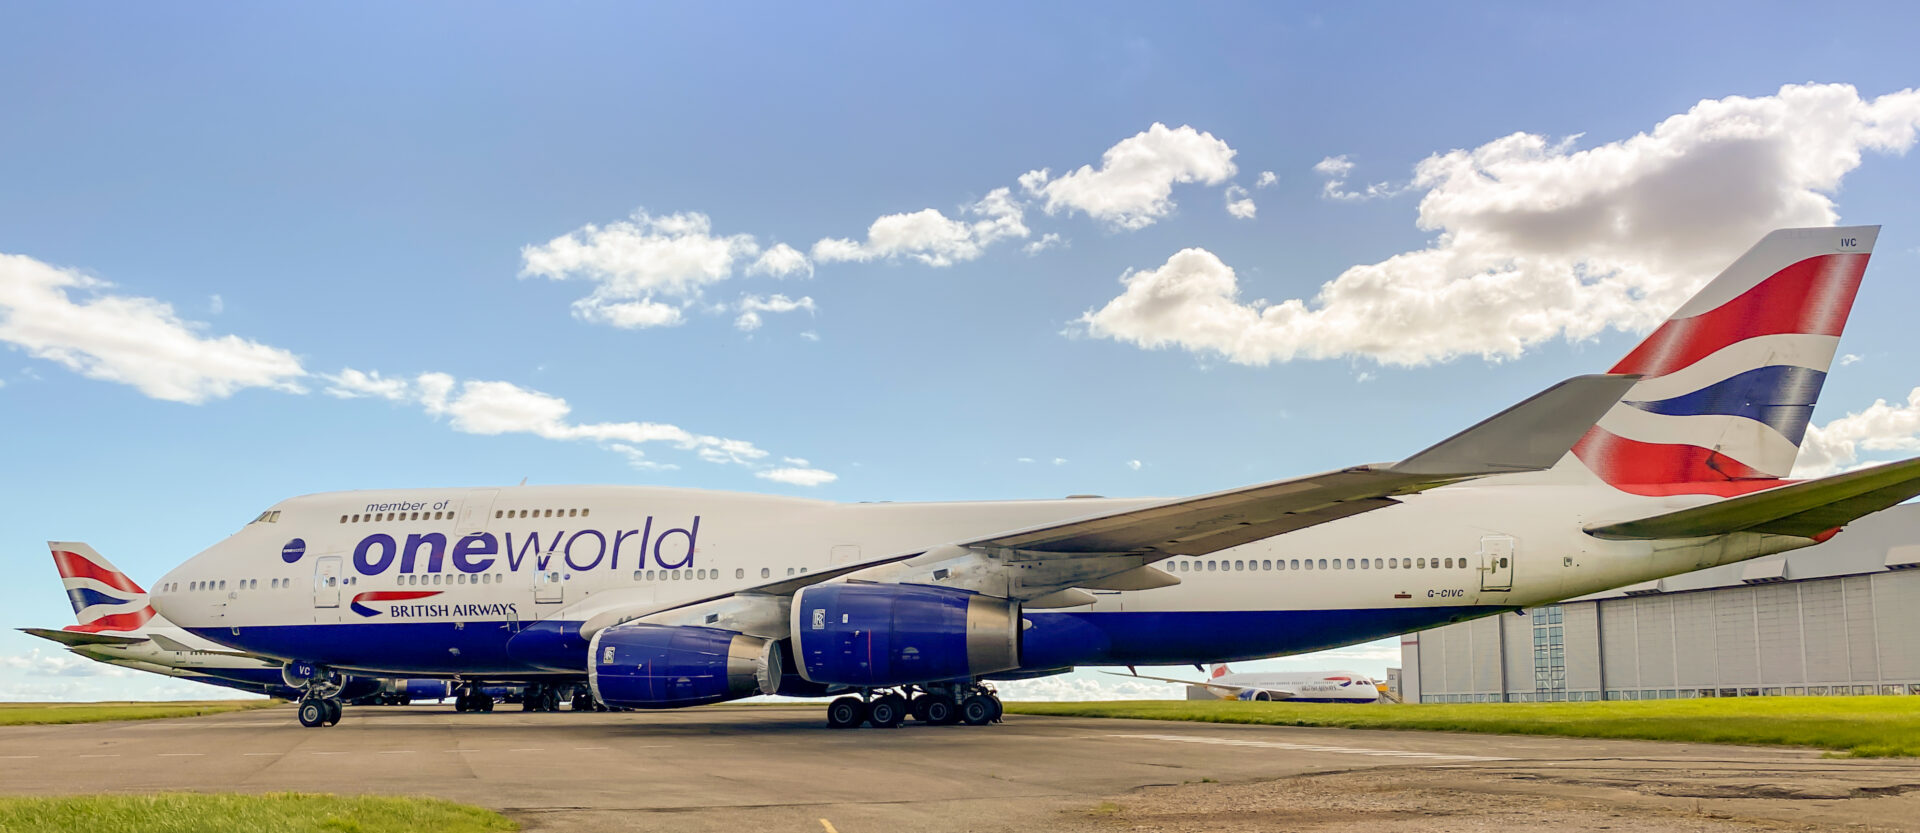 British Airways retires all of its 747s